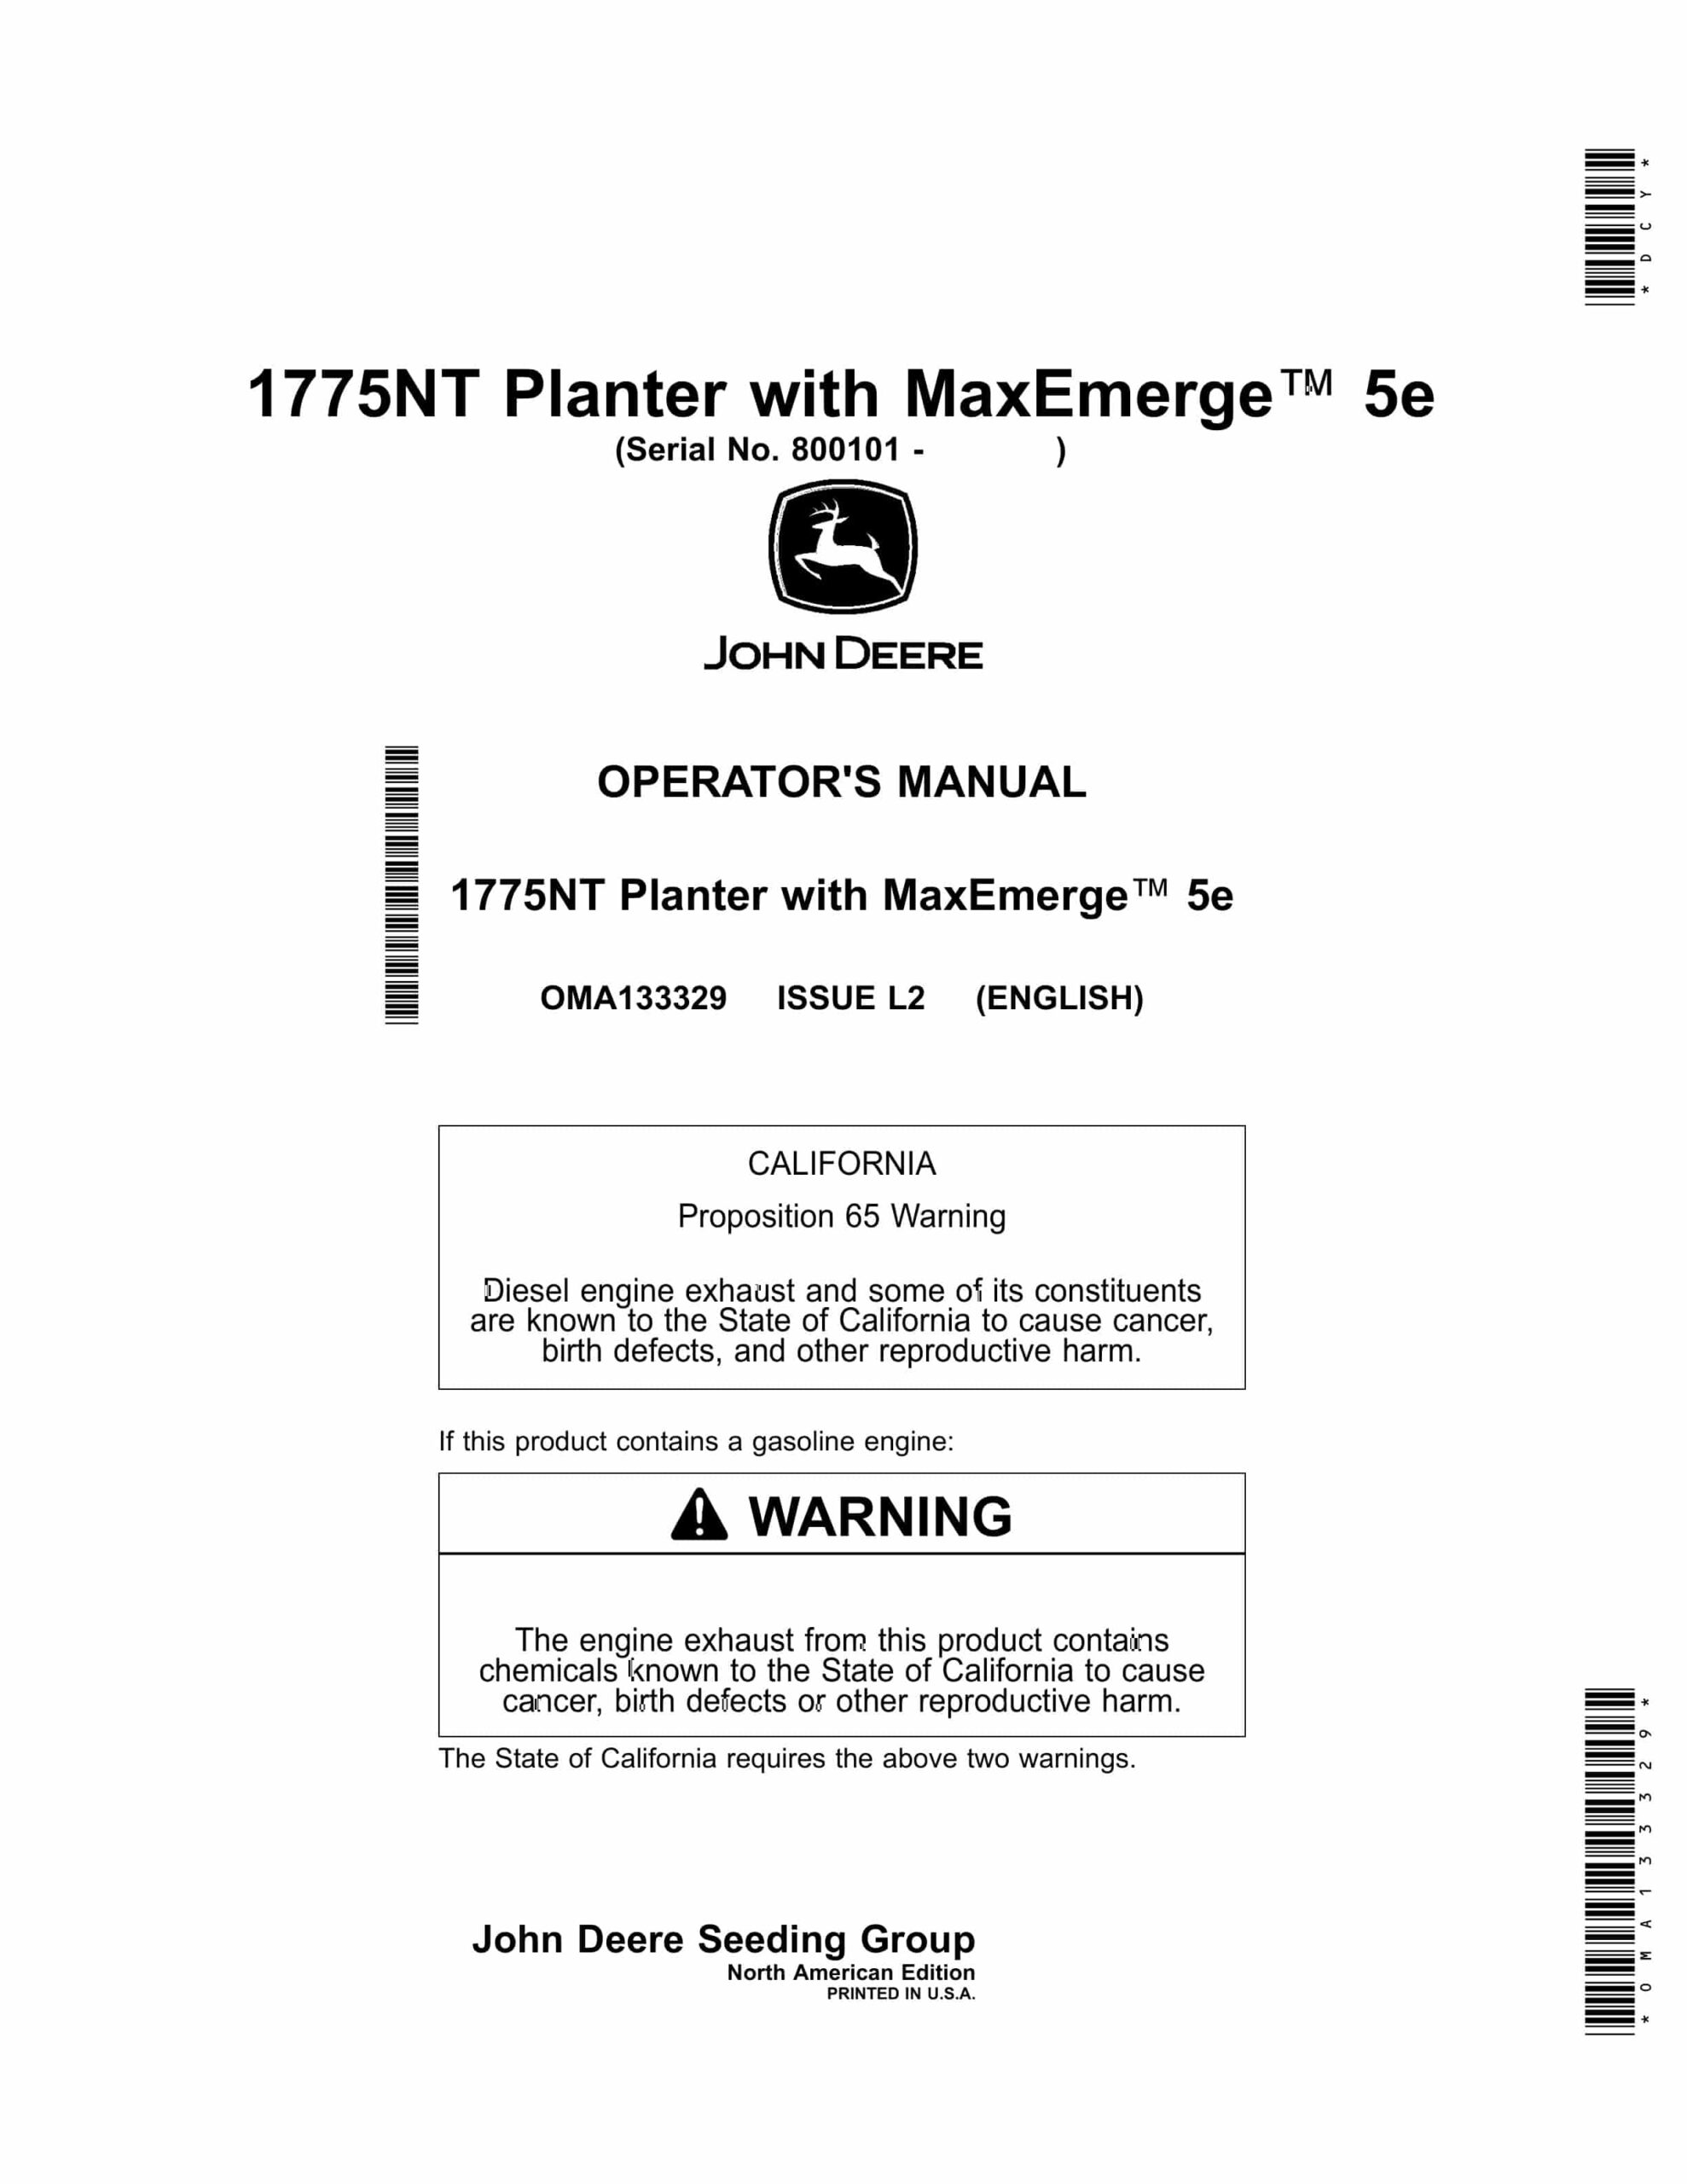 John Deere 1775NT CCS Planter with MaxEmerge 5 Operator Manual OMA133329-1